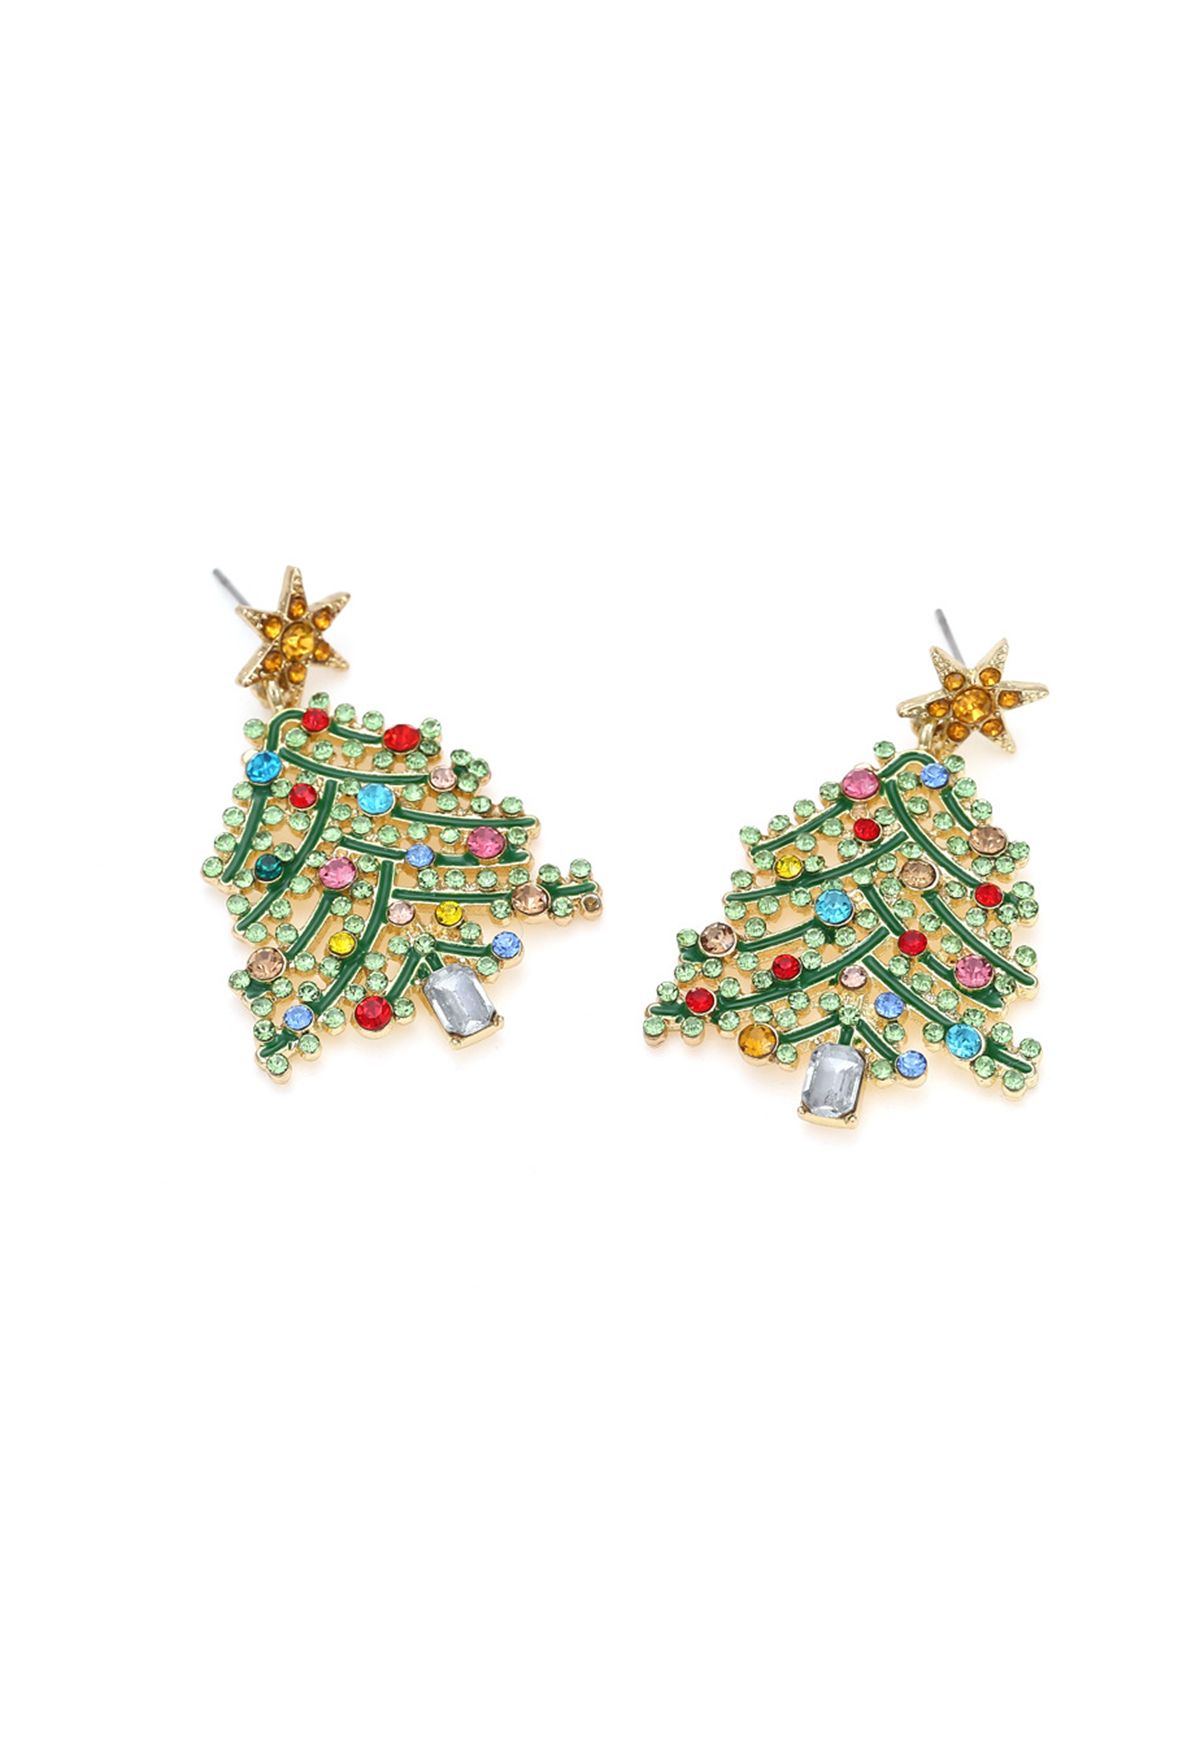 Boucles d'oreilles brillantes de renversement d'huile d'arbre de Noël